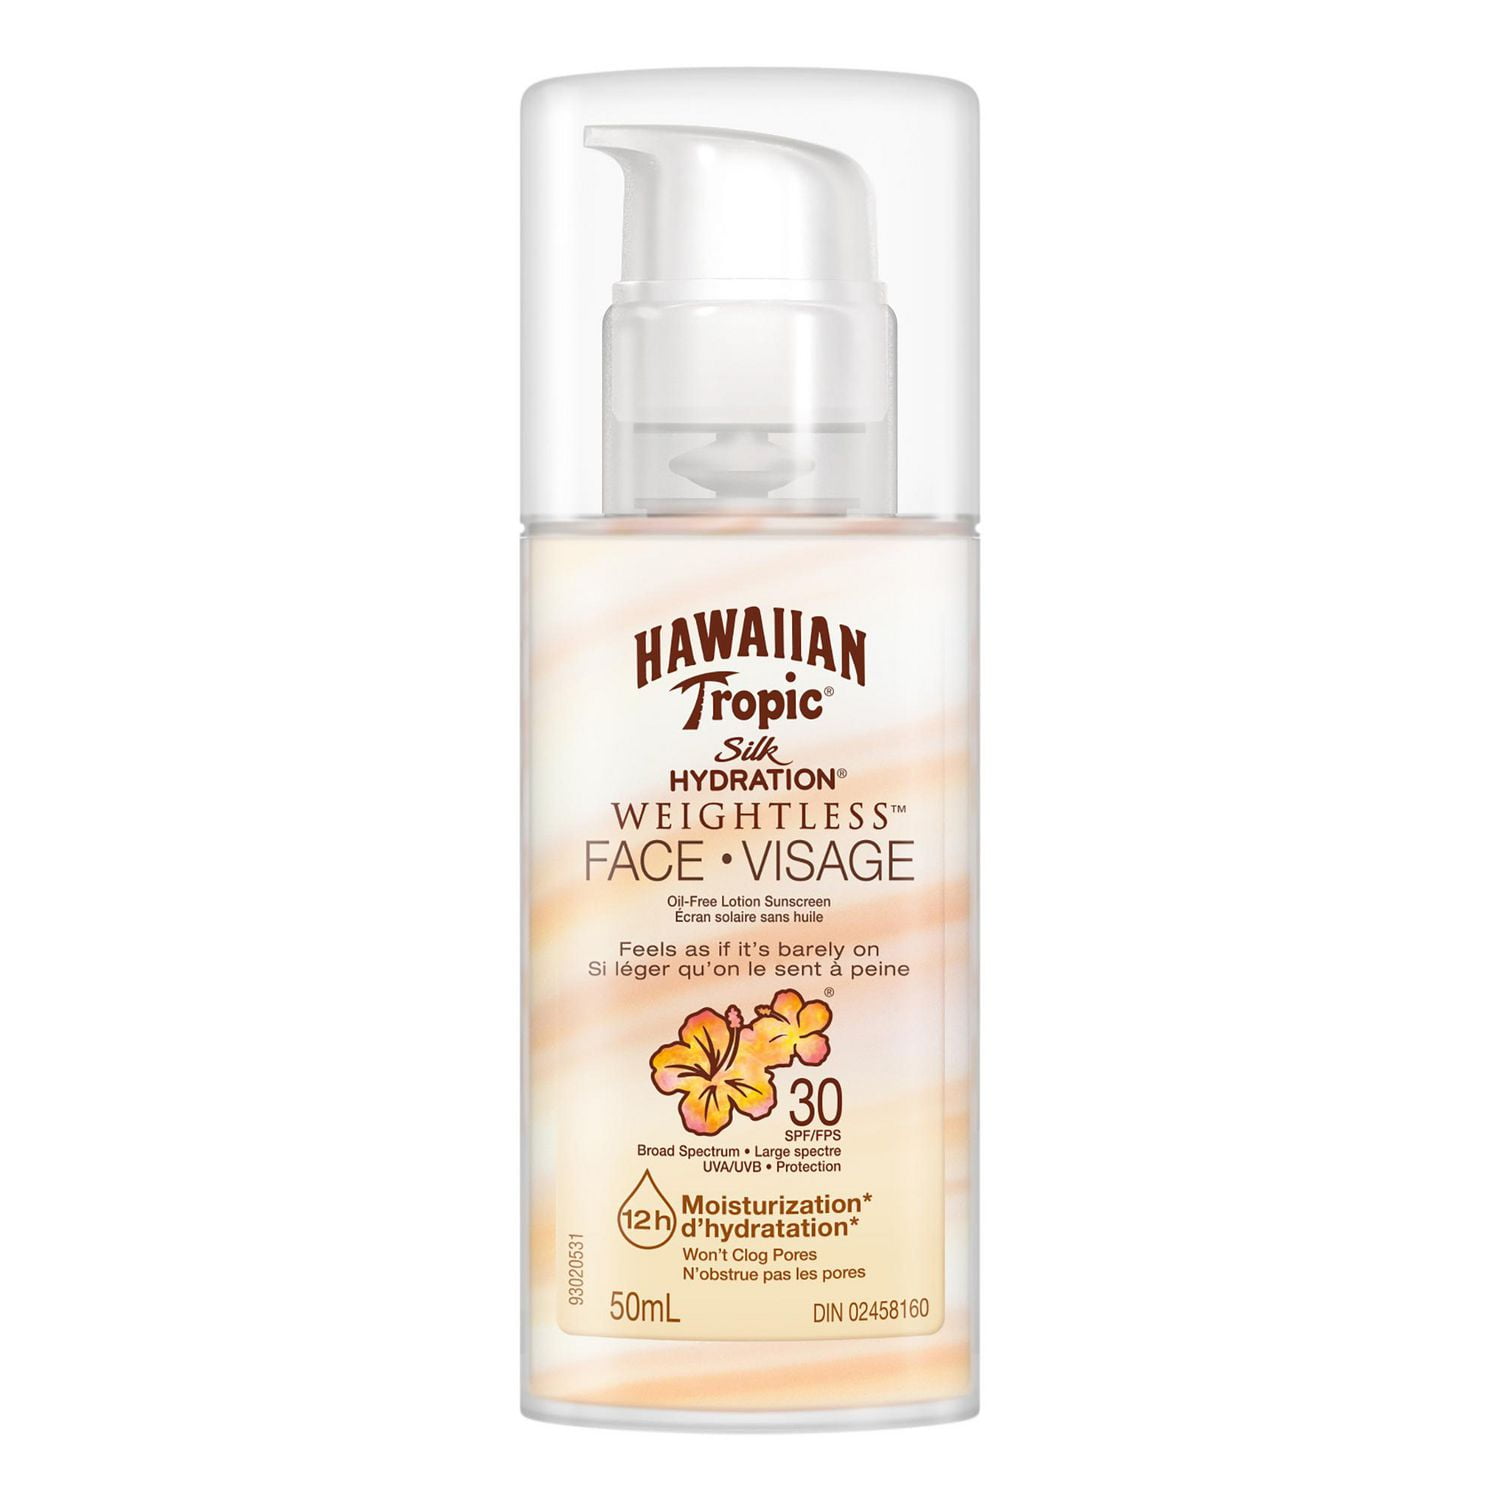 Hawaiian Tropic® Island Sport® Sweat Resistant Sunscreen Spray SPF